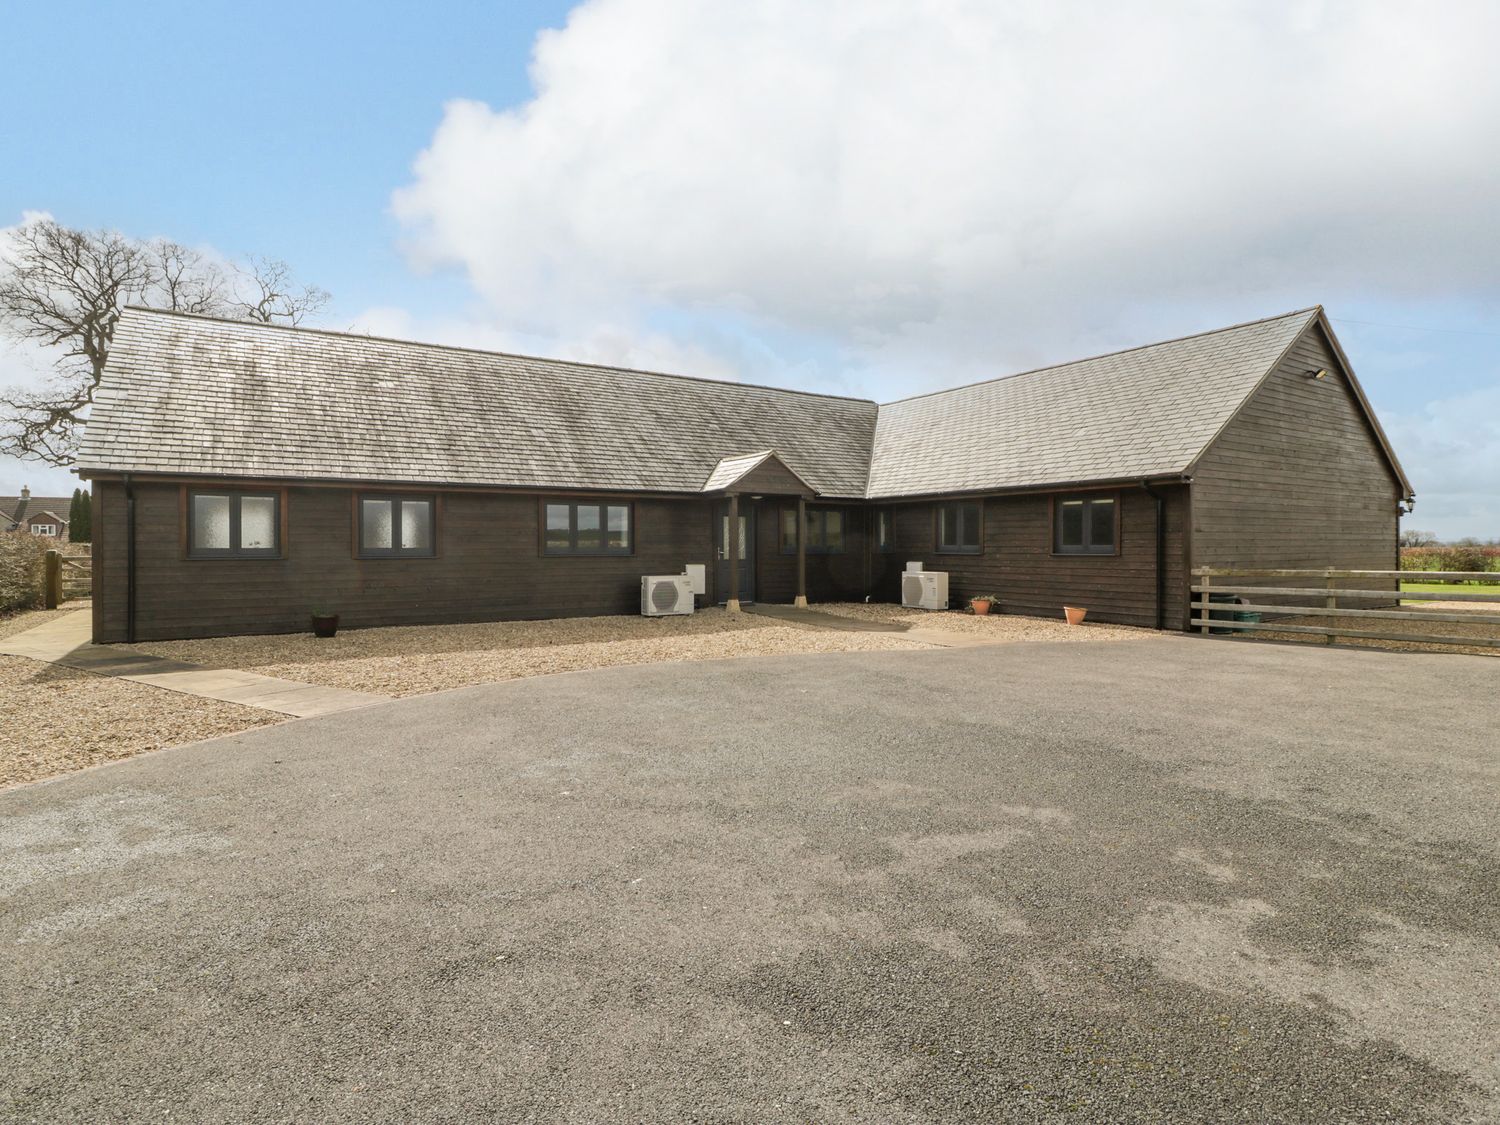 Rectory Farm Lodge - Somerset & Wiltshire - 957128 - photo 1